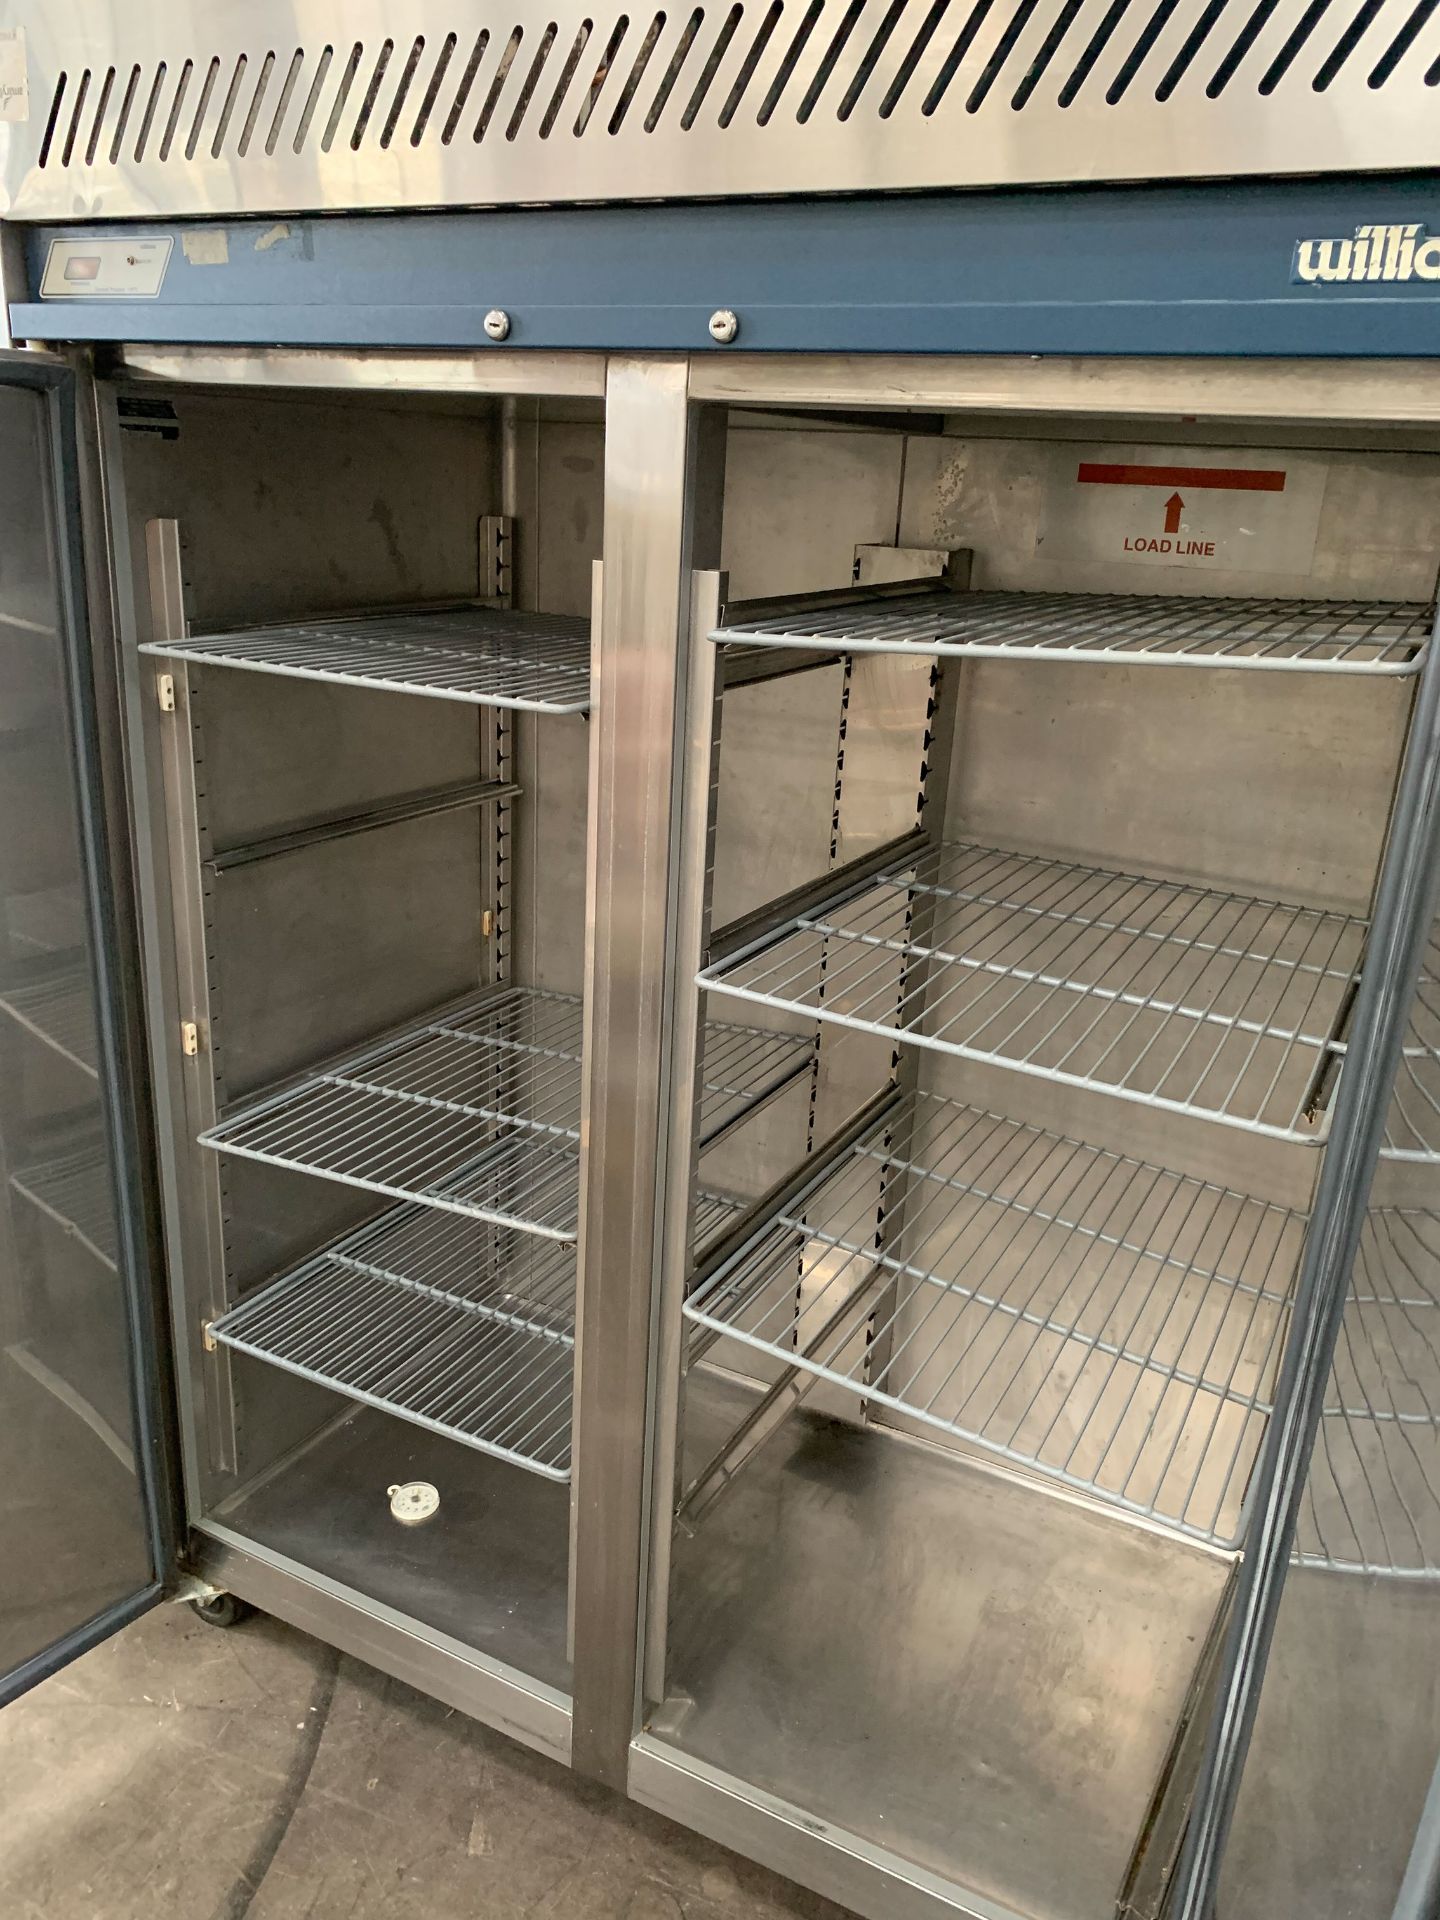 Williams 'HG2T Garnet' Commercial 2-door Refrigerator - Image 4 of 5